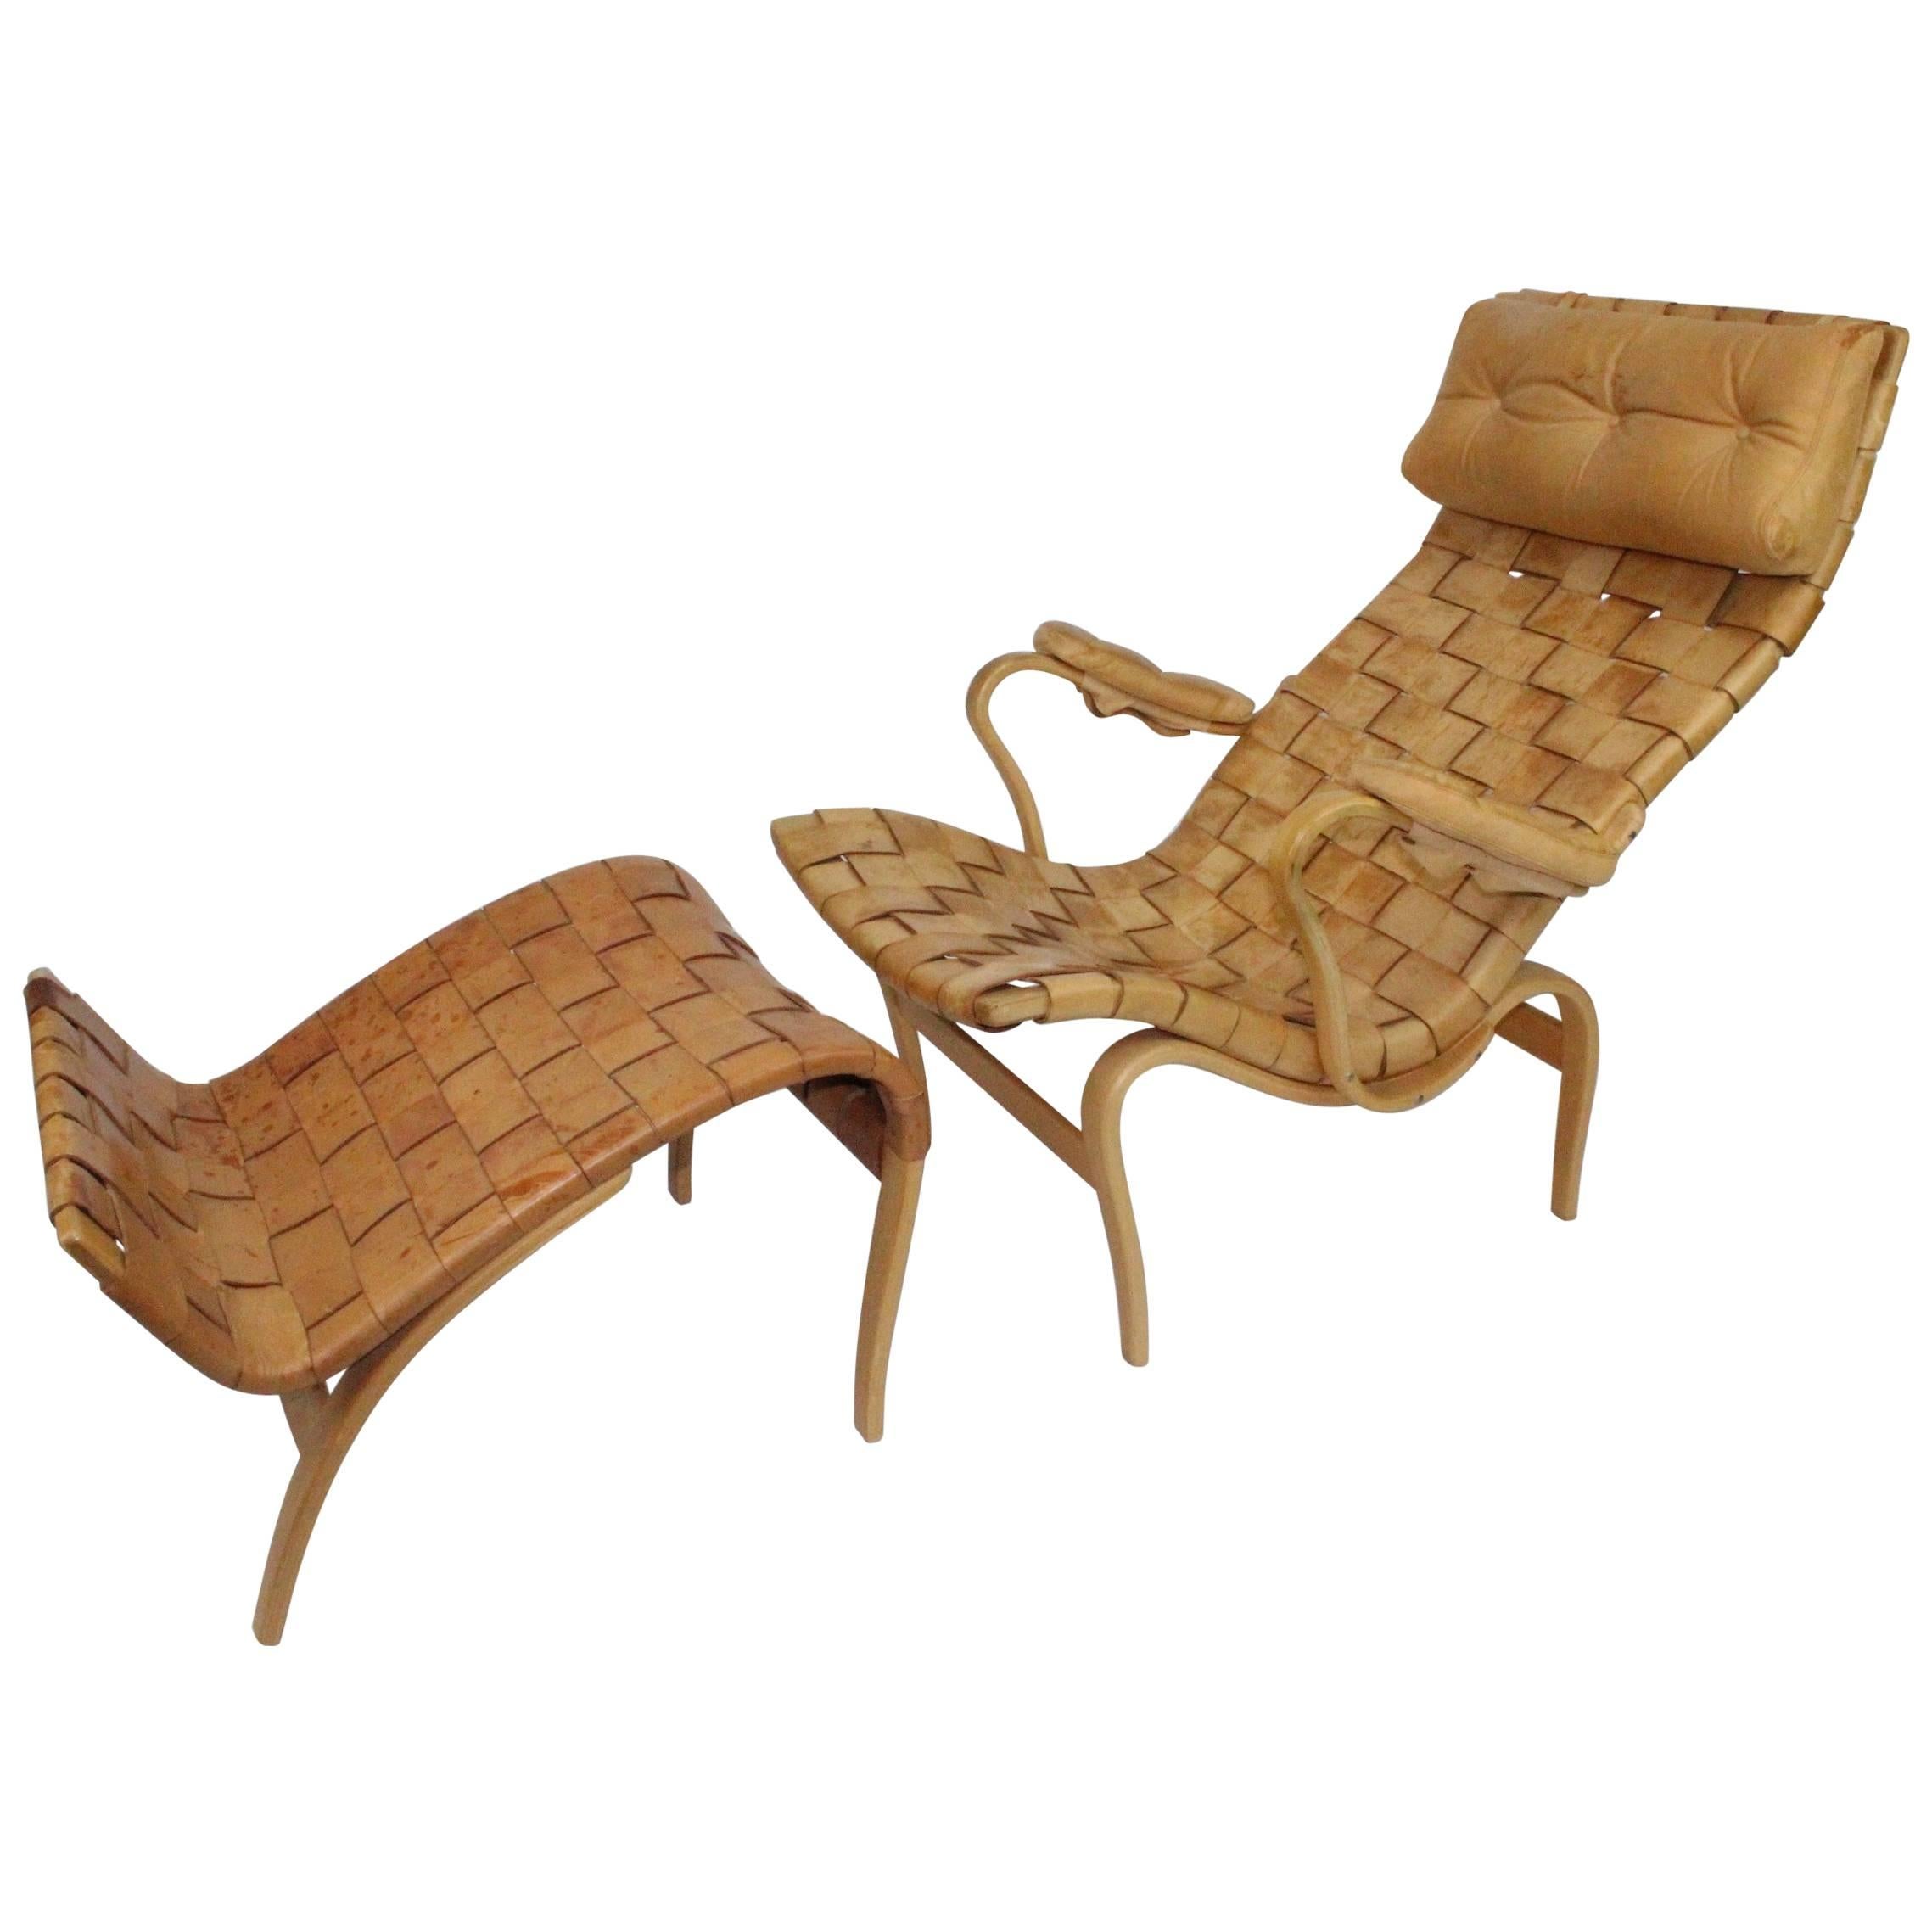 Swedish Pernilla Lounge Chair with Ottoman by Bruno Mathsson for Karl Mathsson